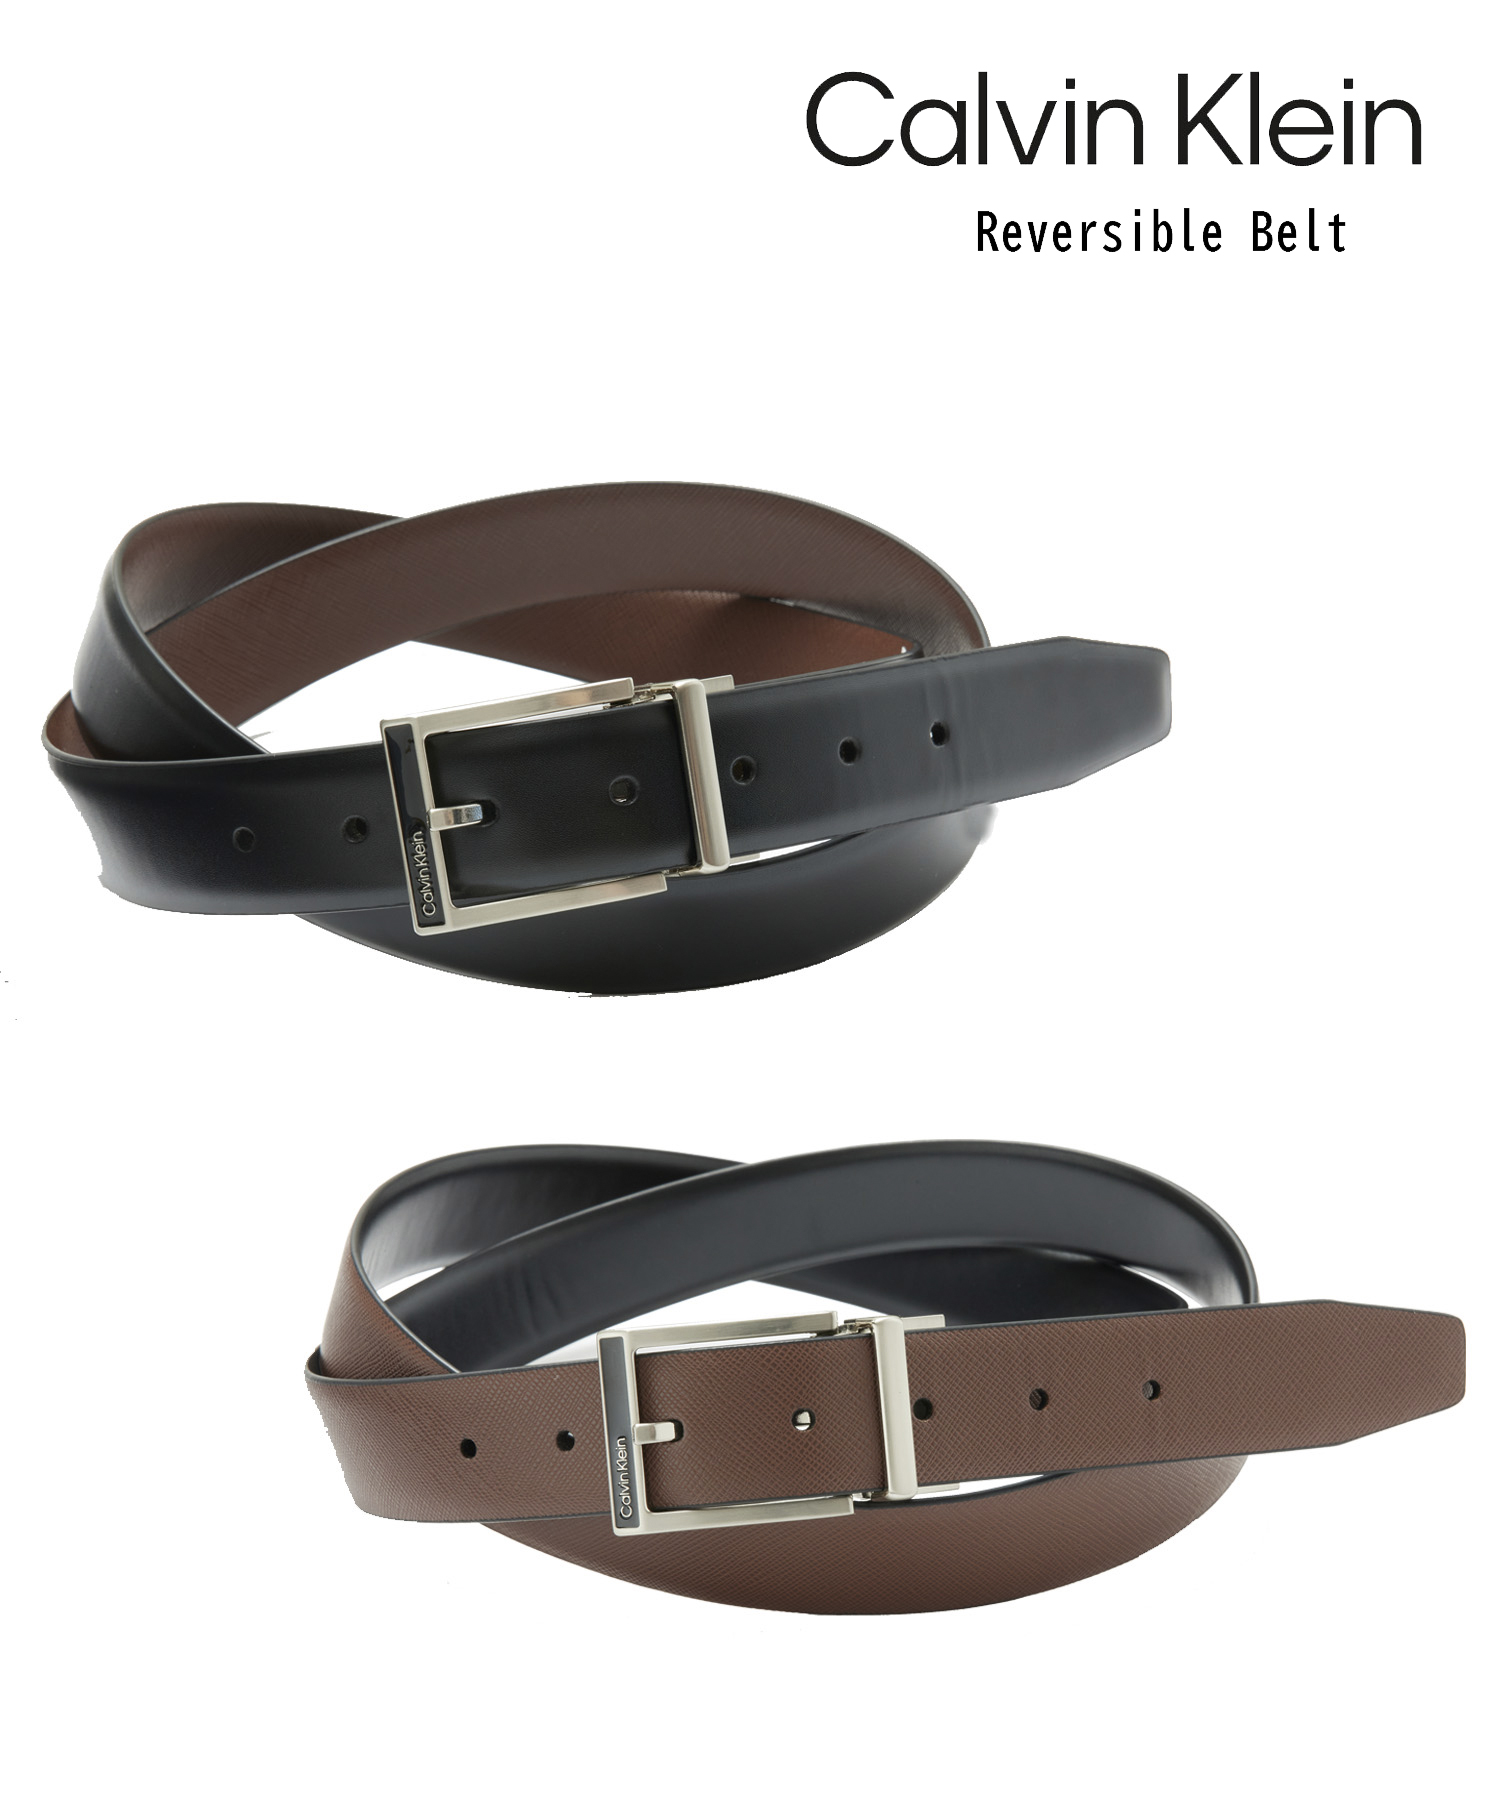 【Calvin Klein / カルバンクライン】Reversible Belt / リバーシブル ベルト ギフト プレゼント